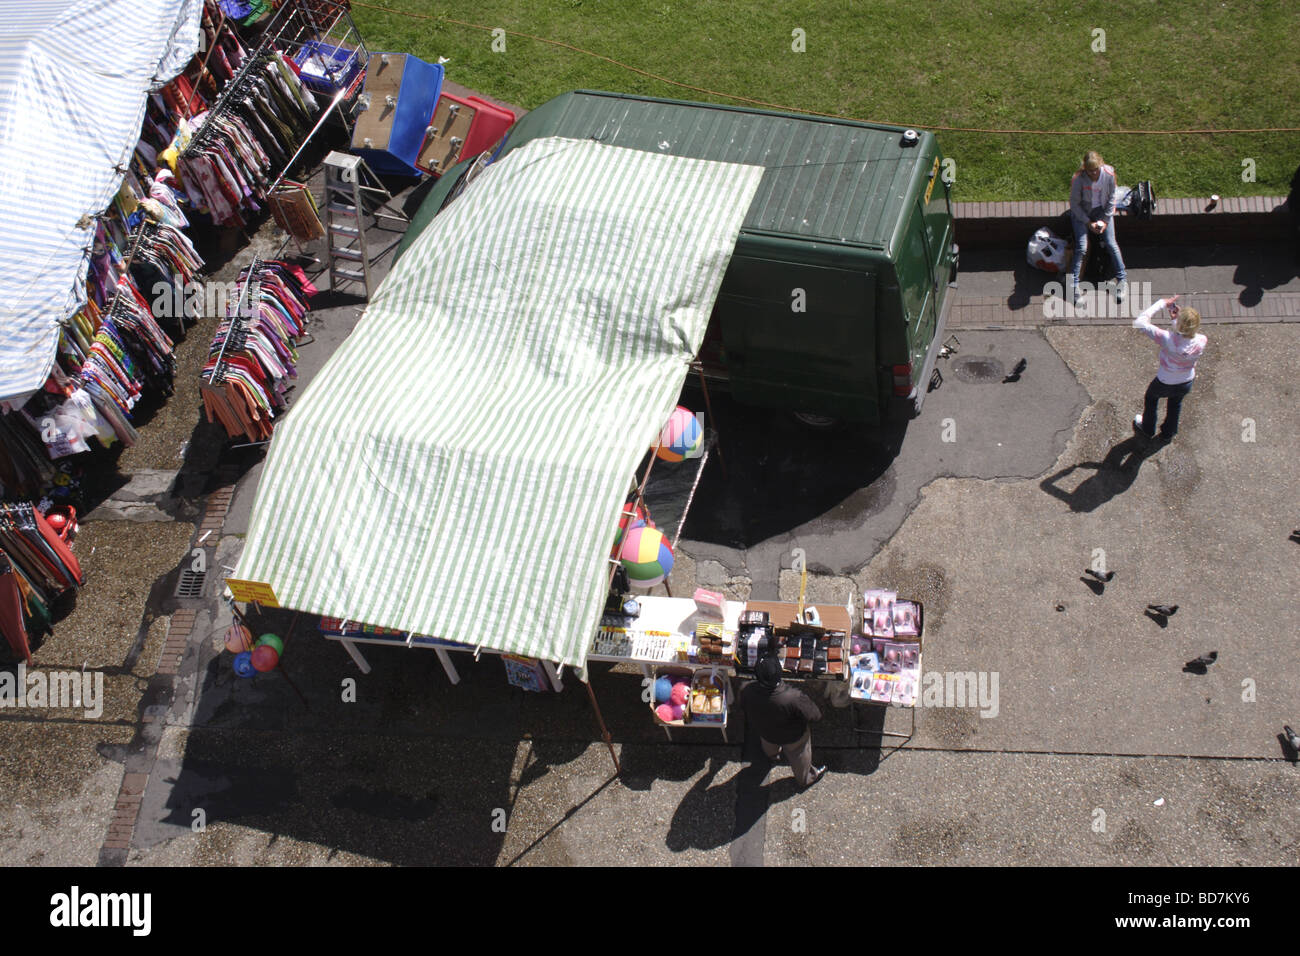 Aerial view of street market stall Hosier street Reading Berkshire July 2009 Stock Photo